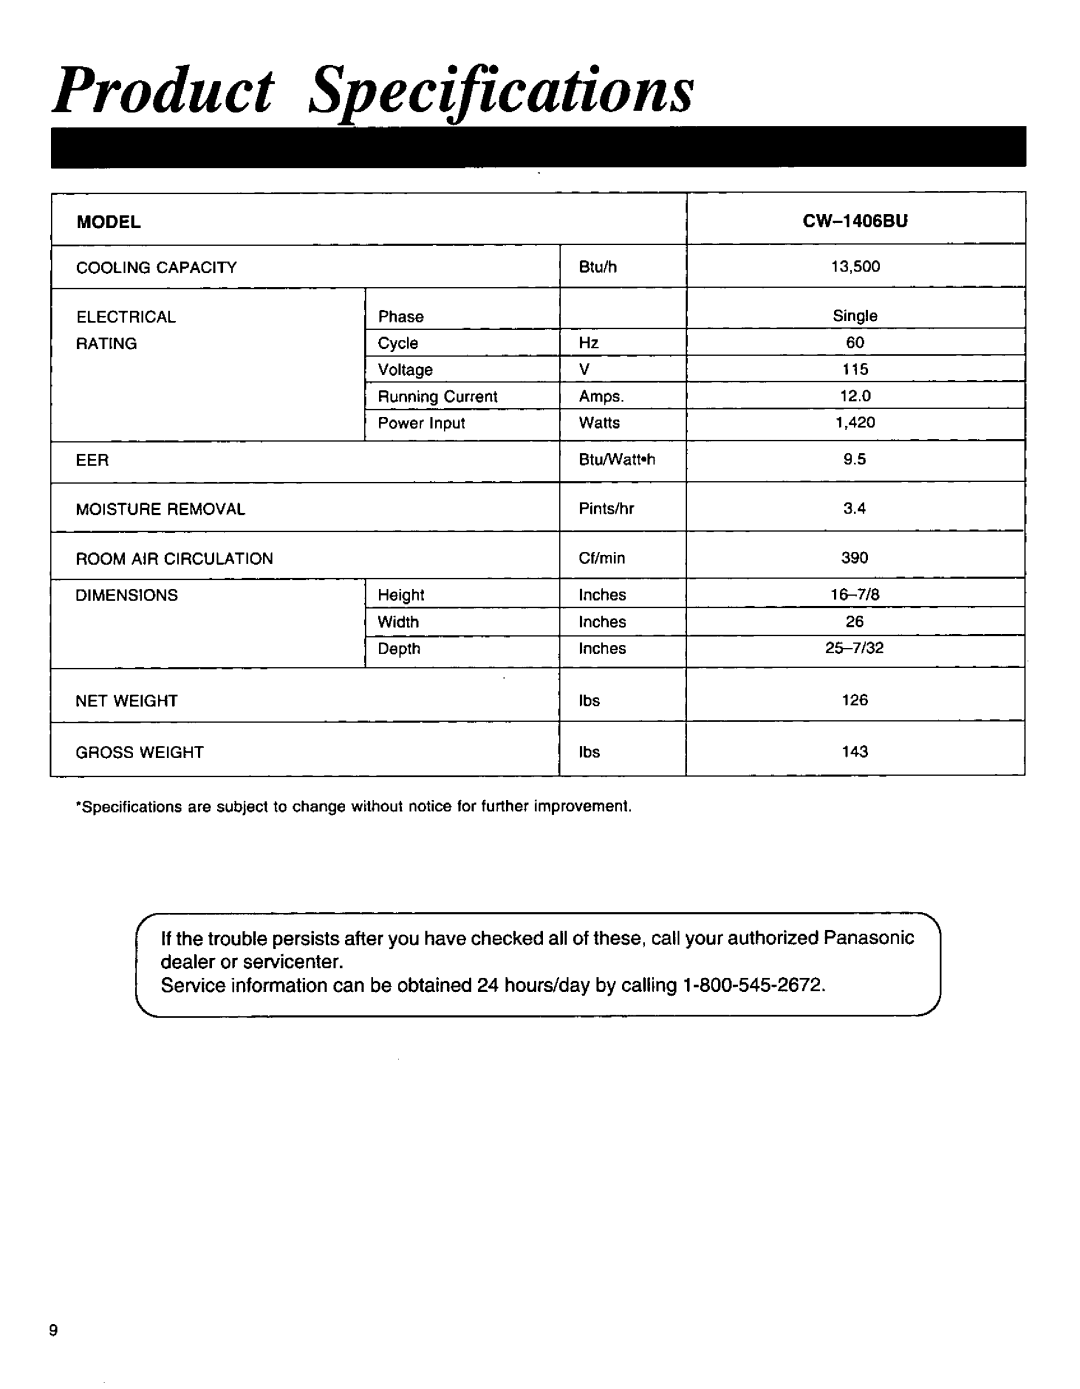 Panasonic CW-1406BU manual 